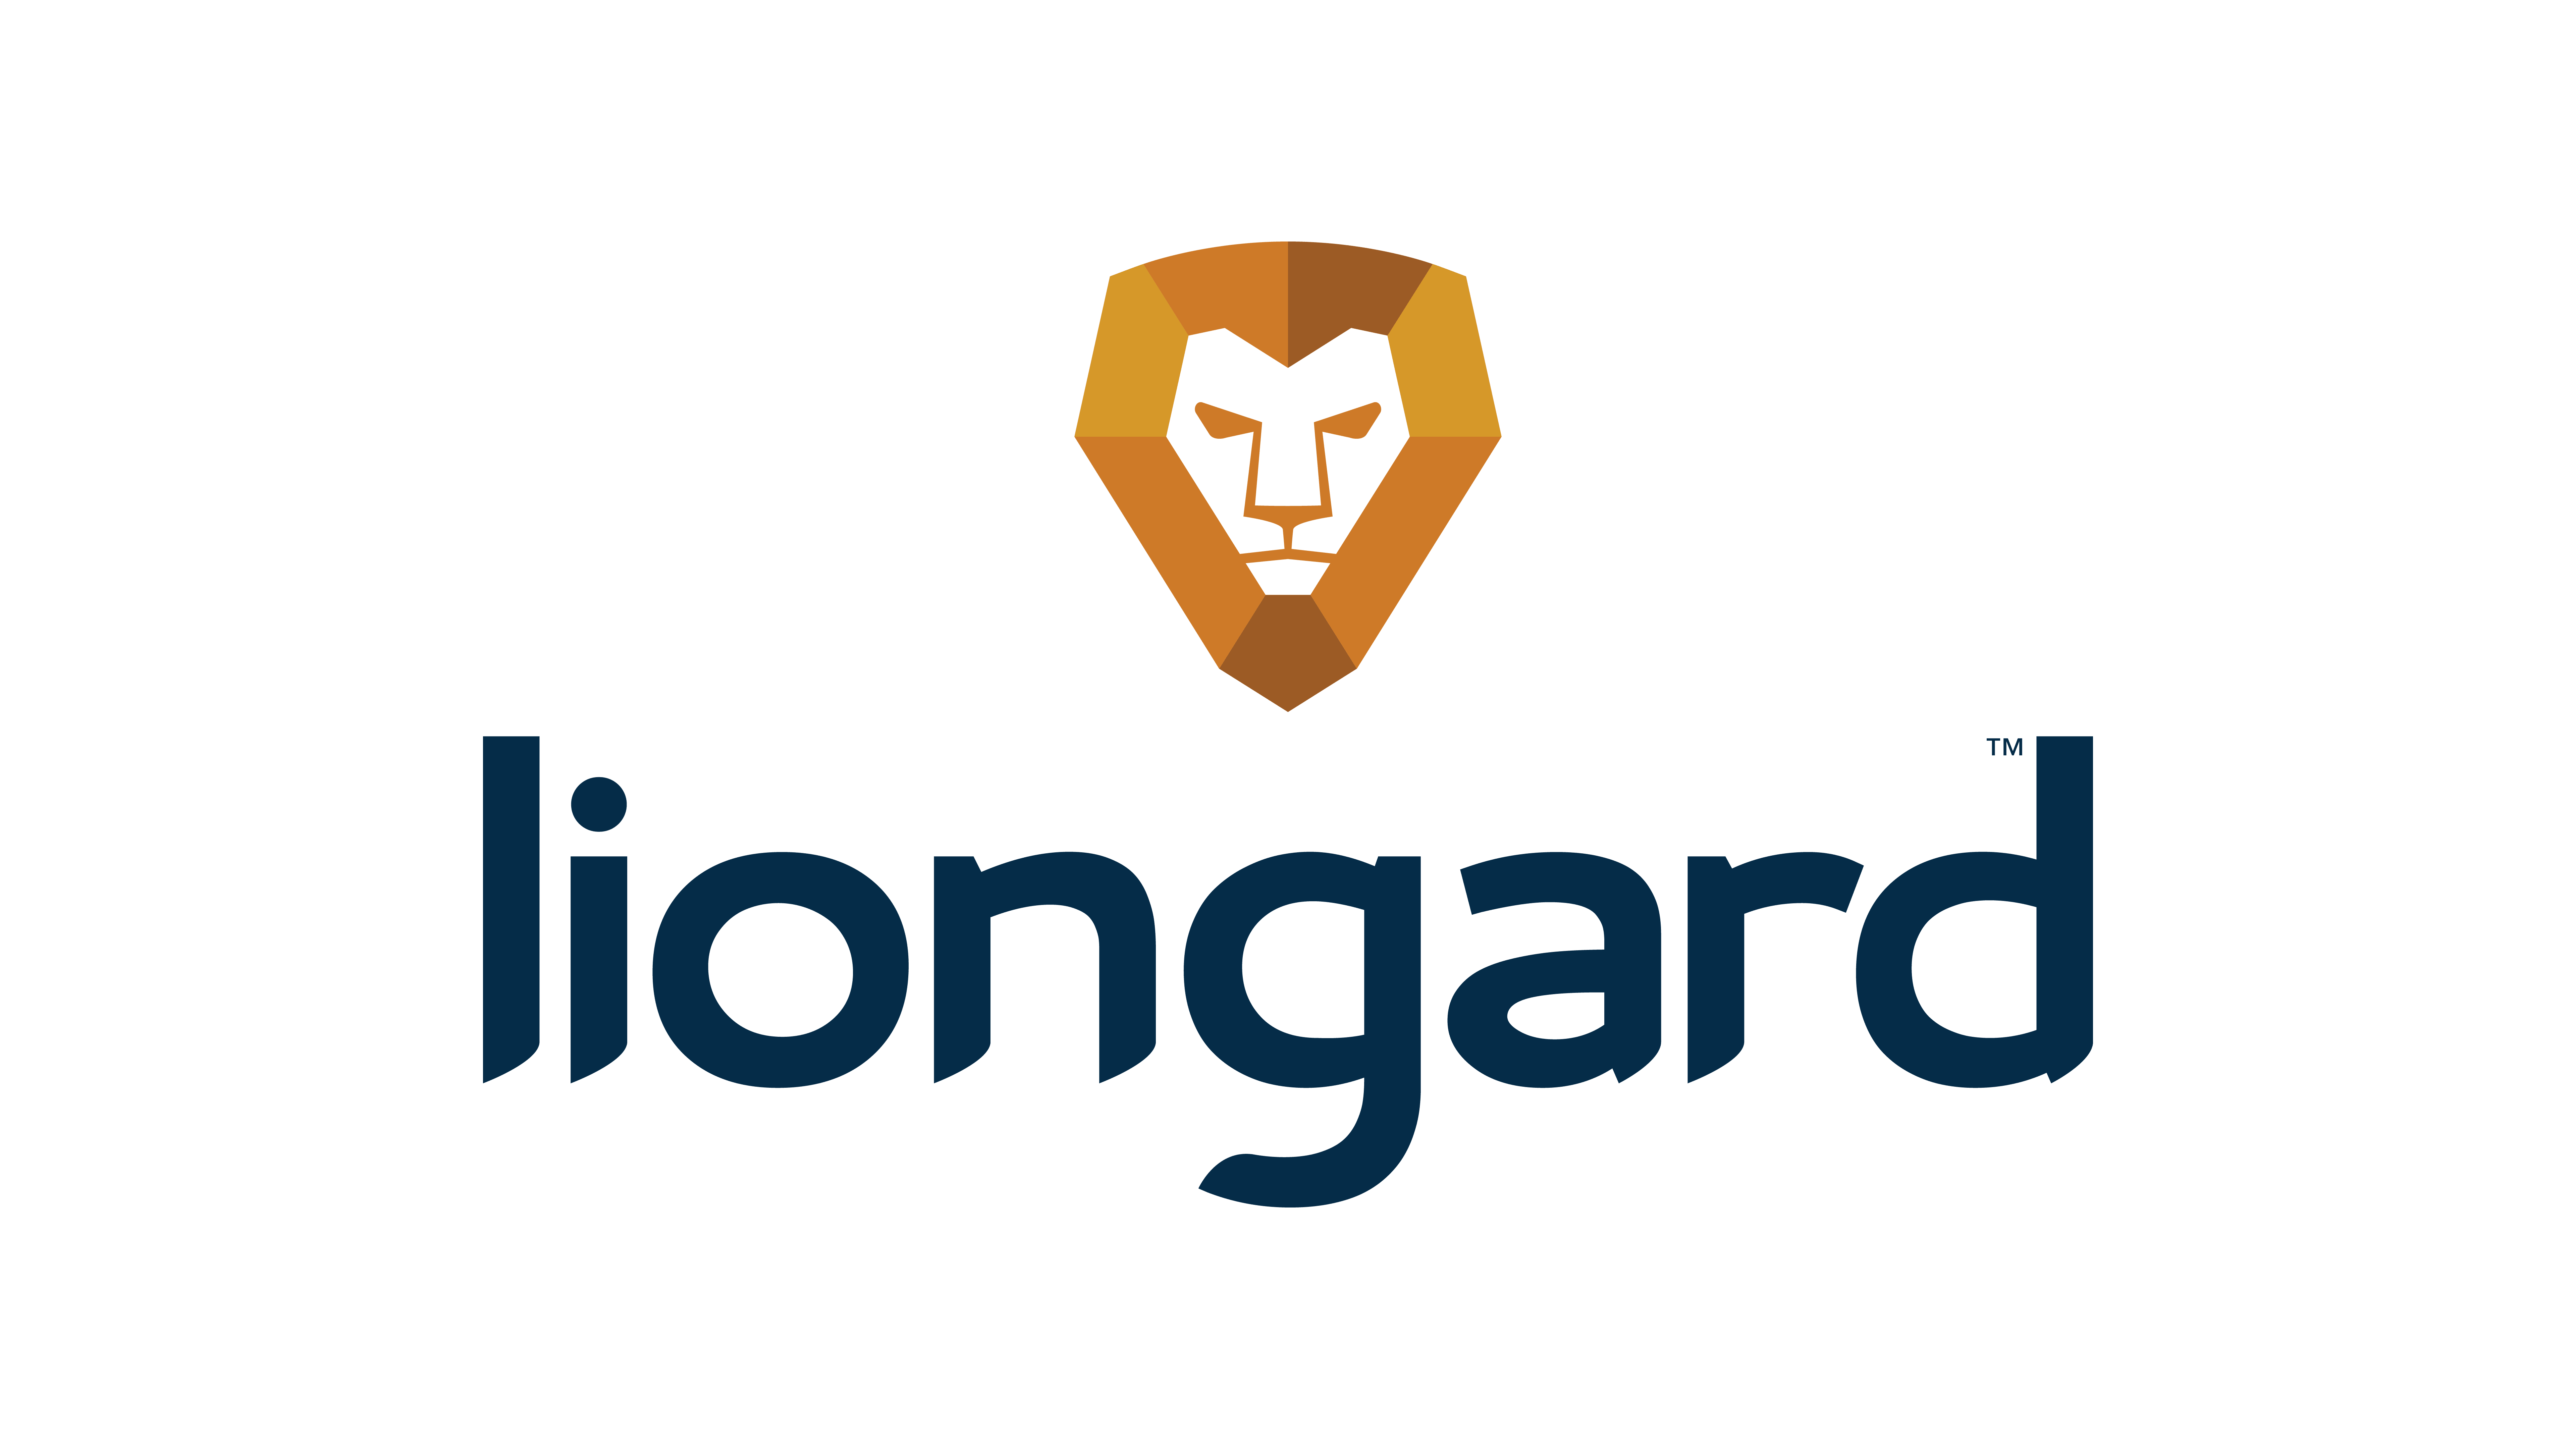 Liongard